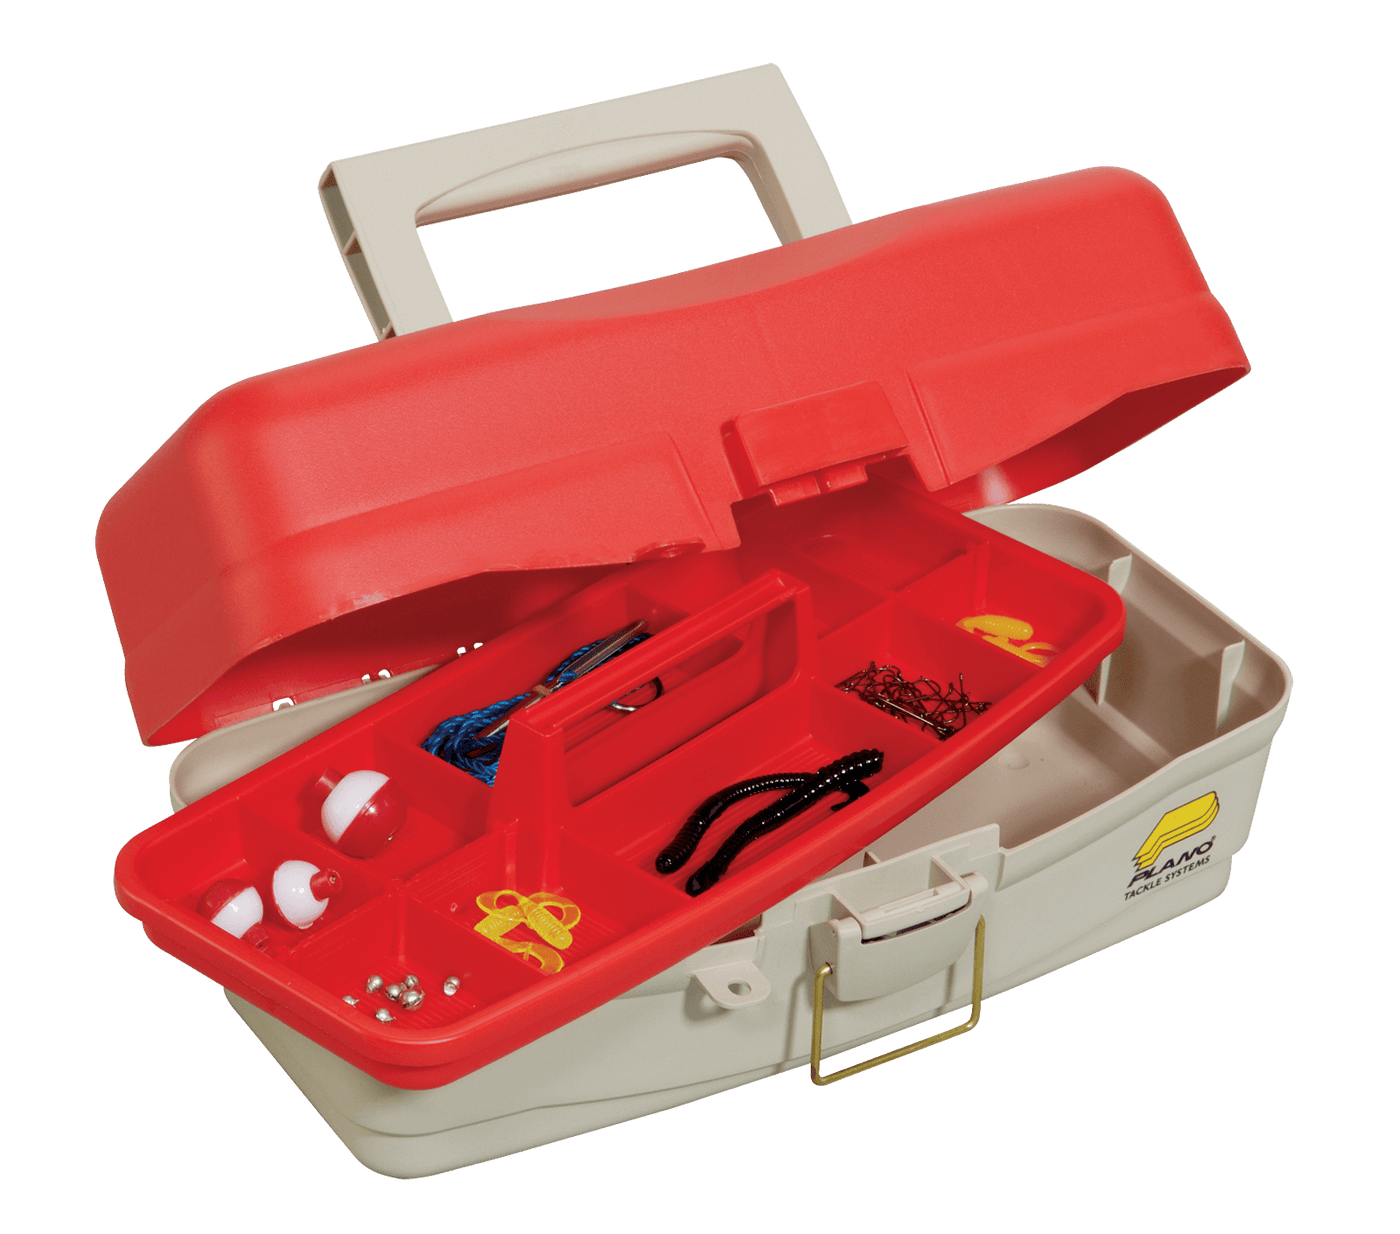 Plano Tackle Boxes - Plano Storage Cases